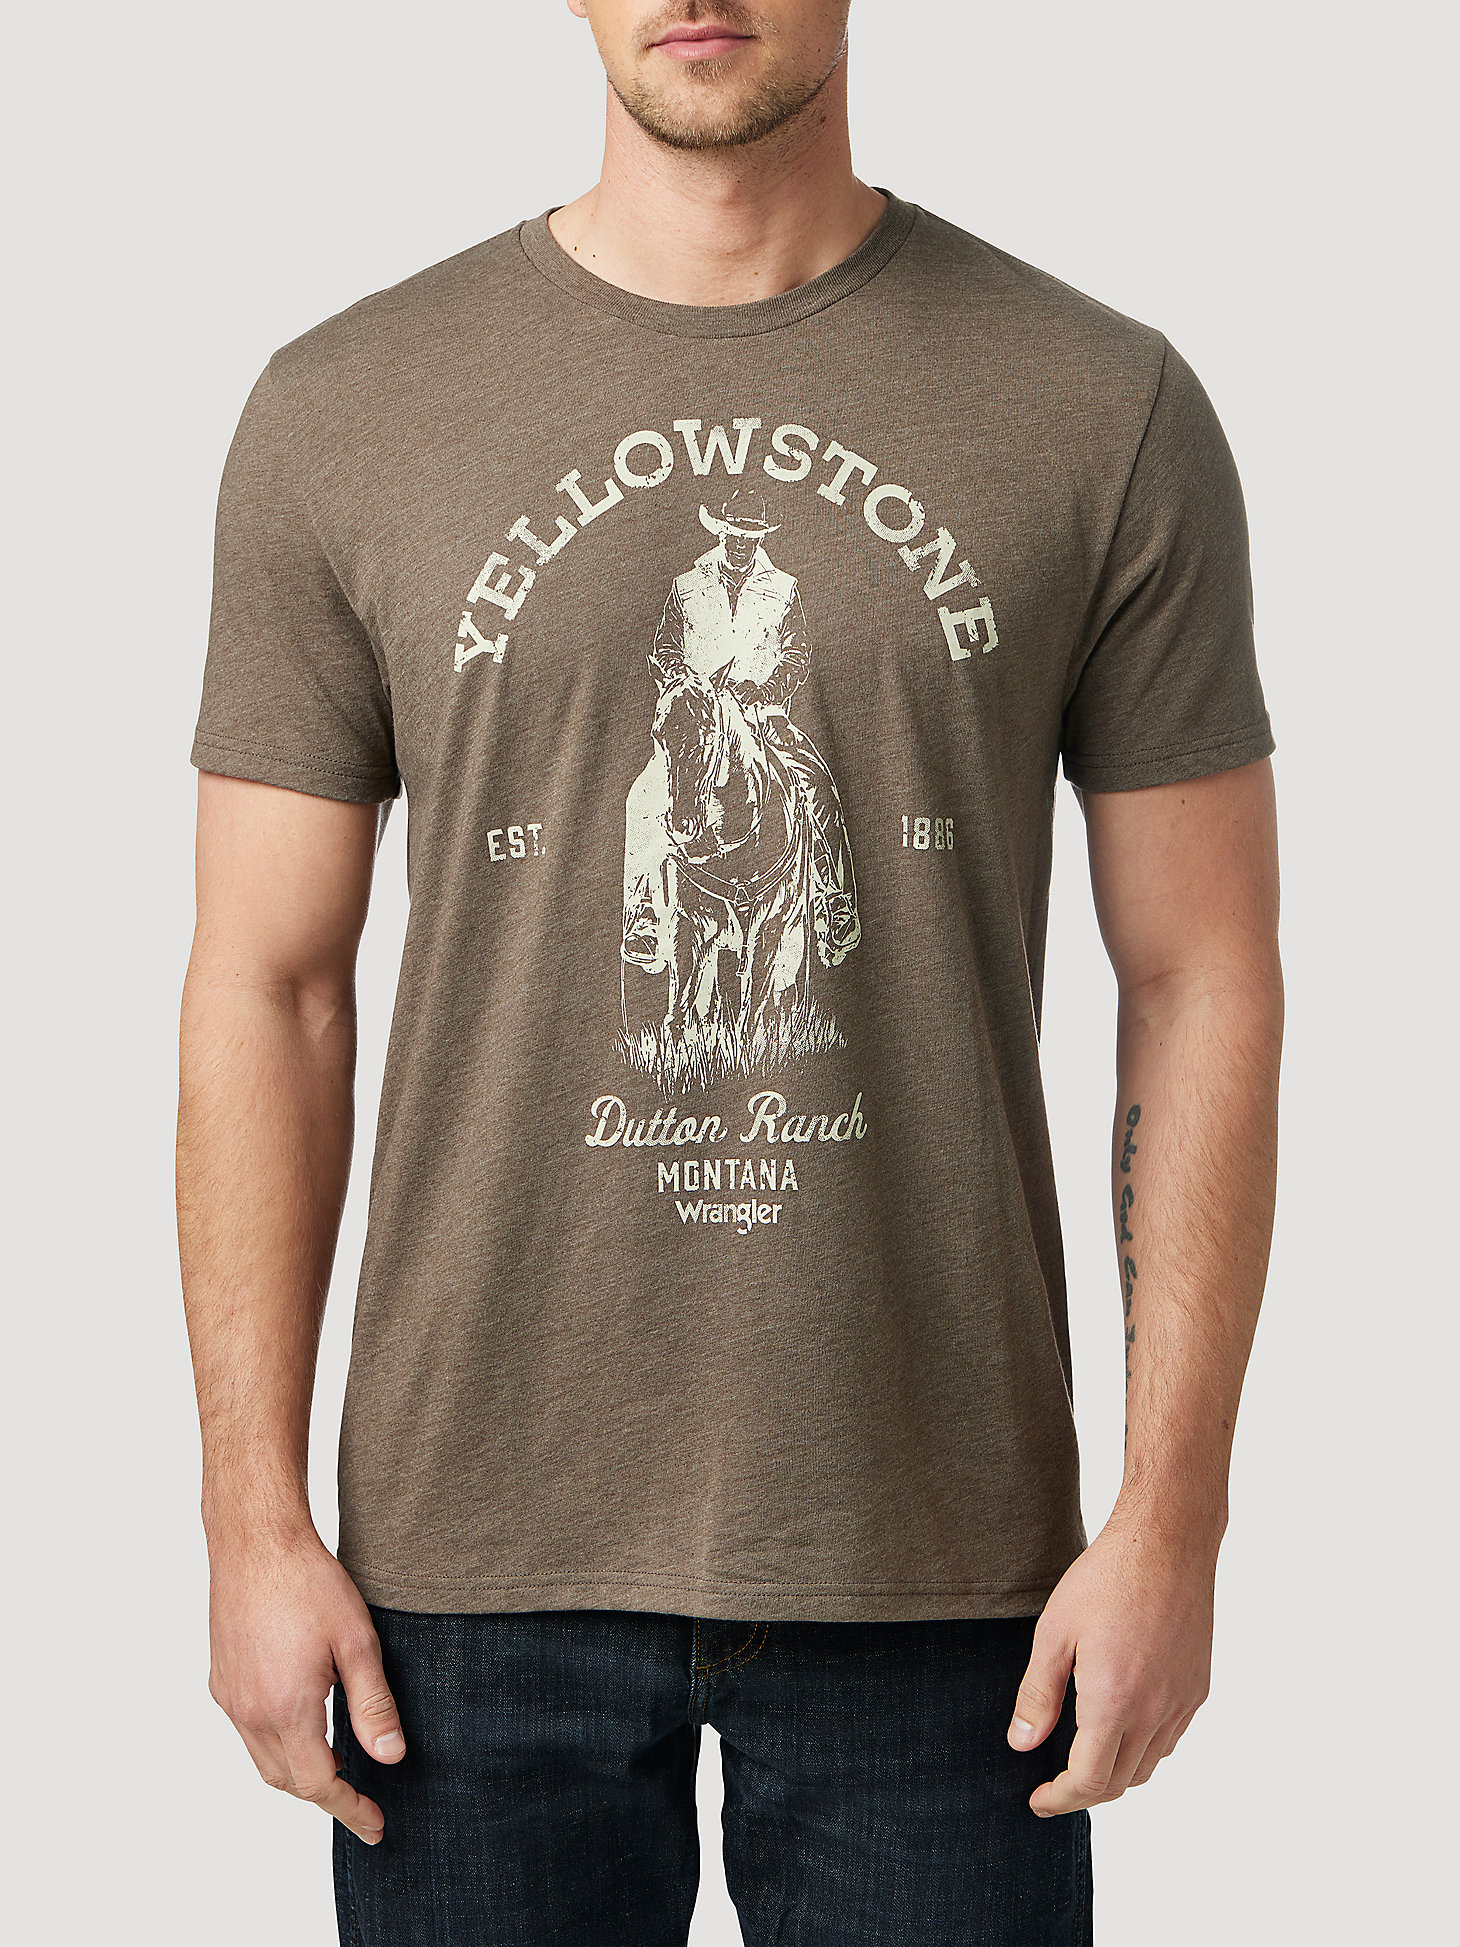 Wrangler x Yellowstone Men's Cowboy T-Shirt in Brown Heather alternative view 1